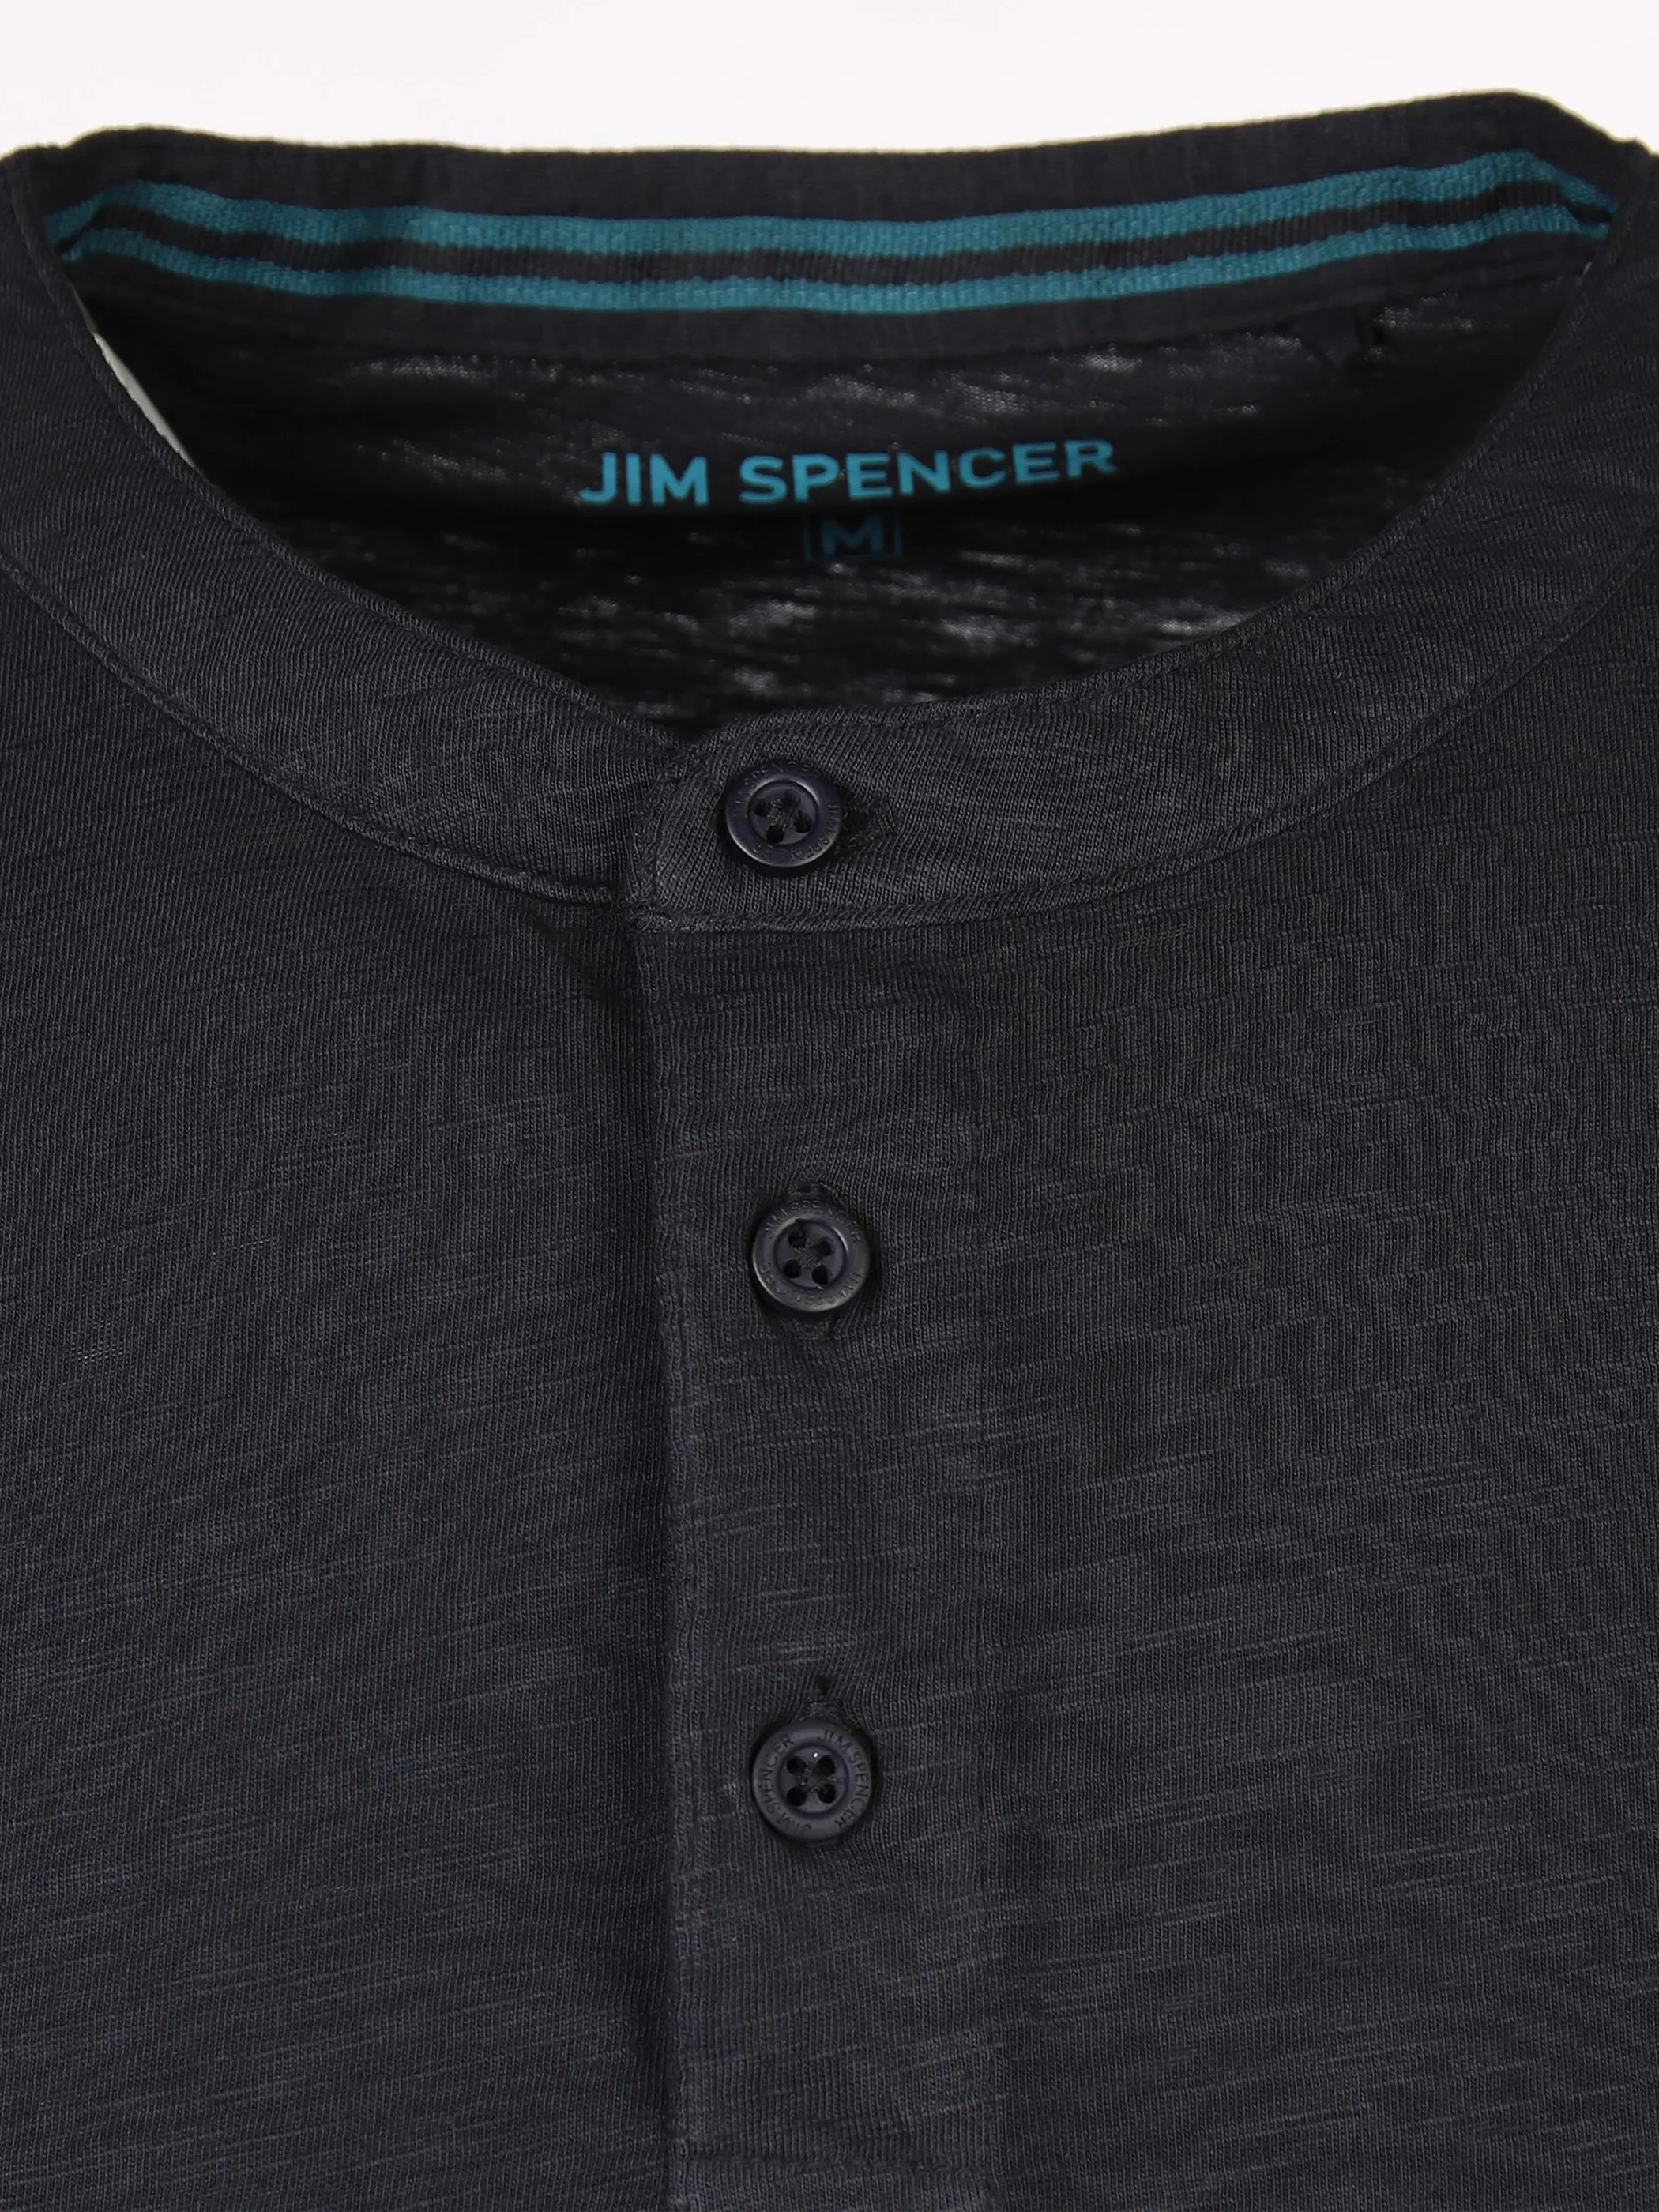 Jim Spencer He. Henleyshirt 1/2 Arm Stickerei Blau 876158 NAVY 3